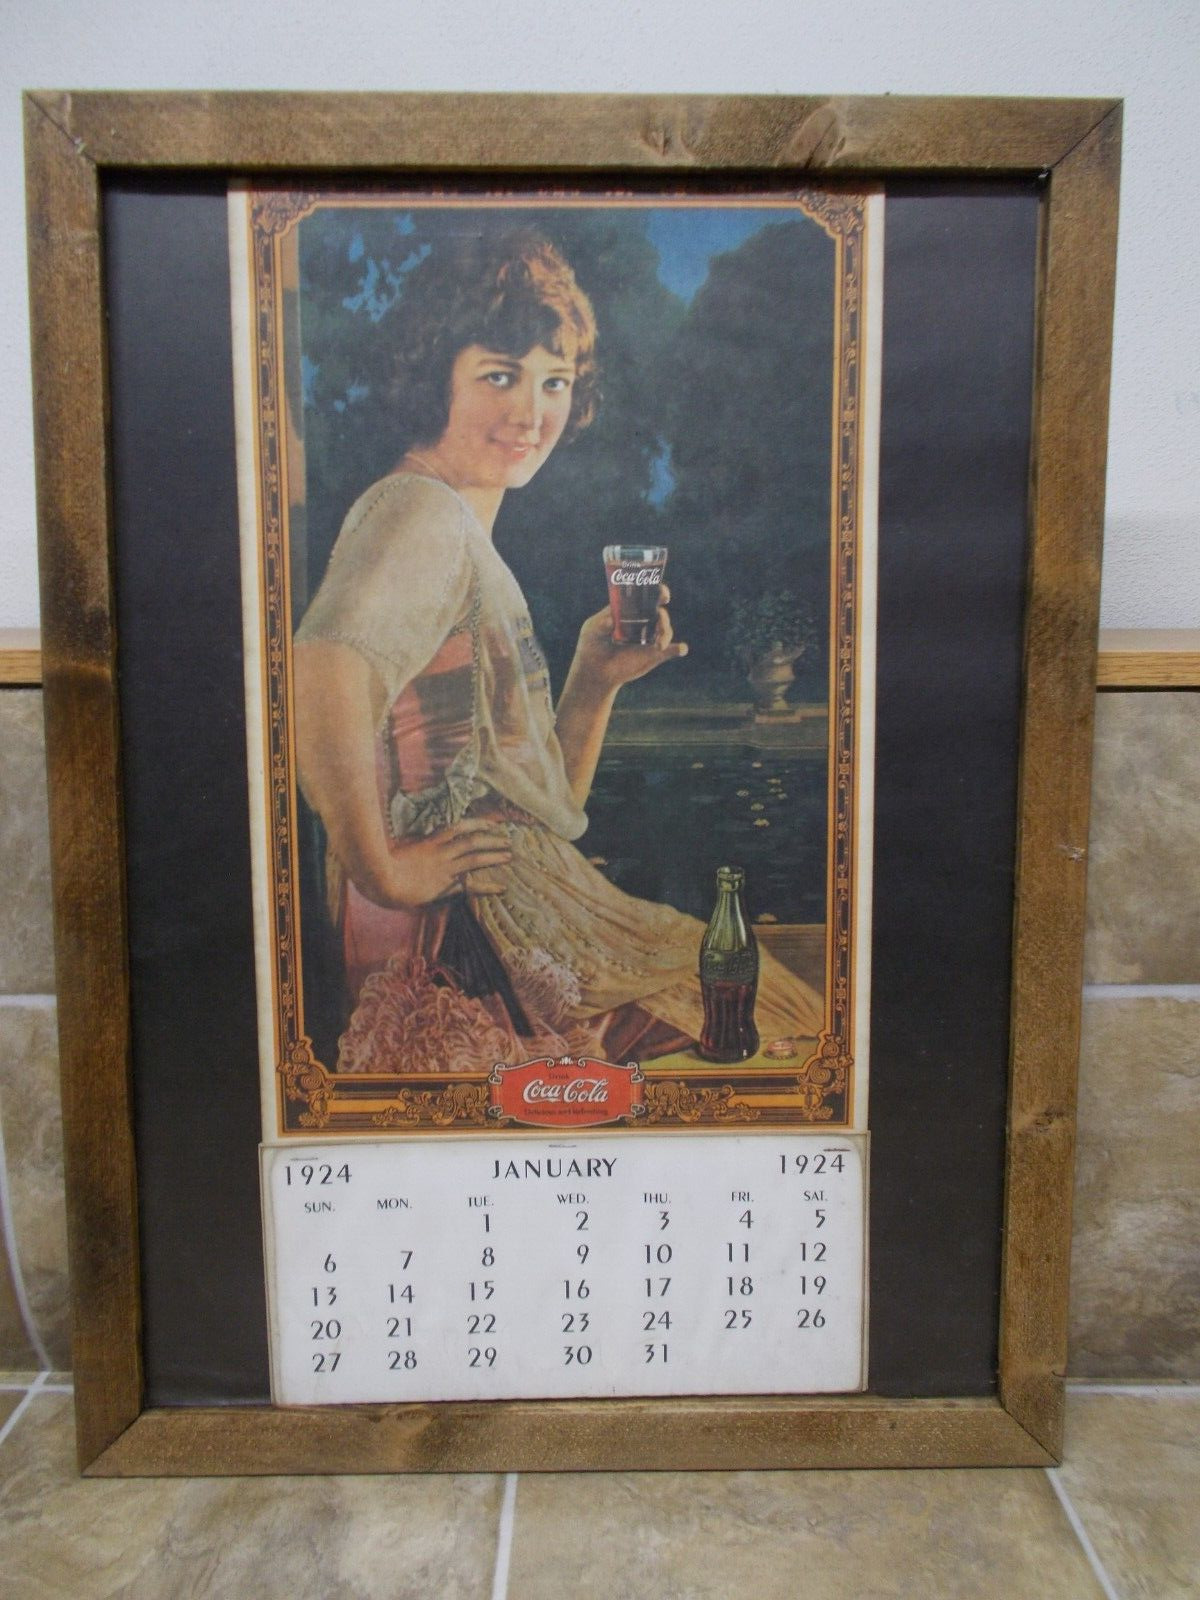 Wood Framed “COCA COLA” CALENDAR - 1924 - Coke Reproduction?